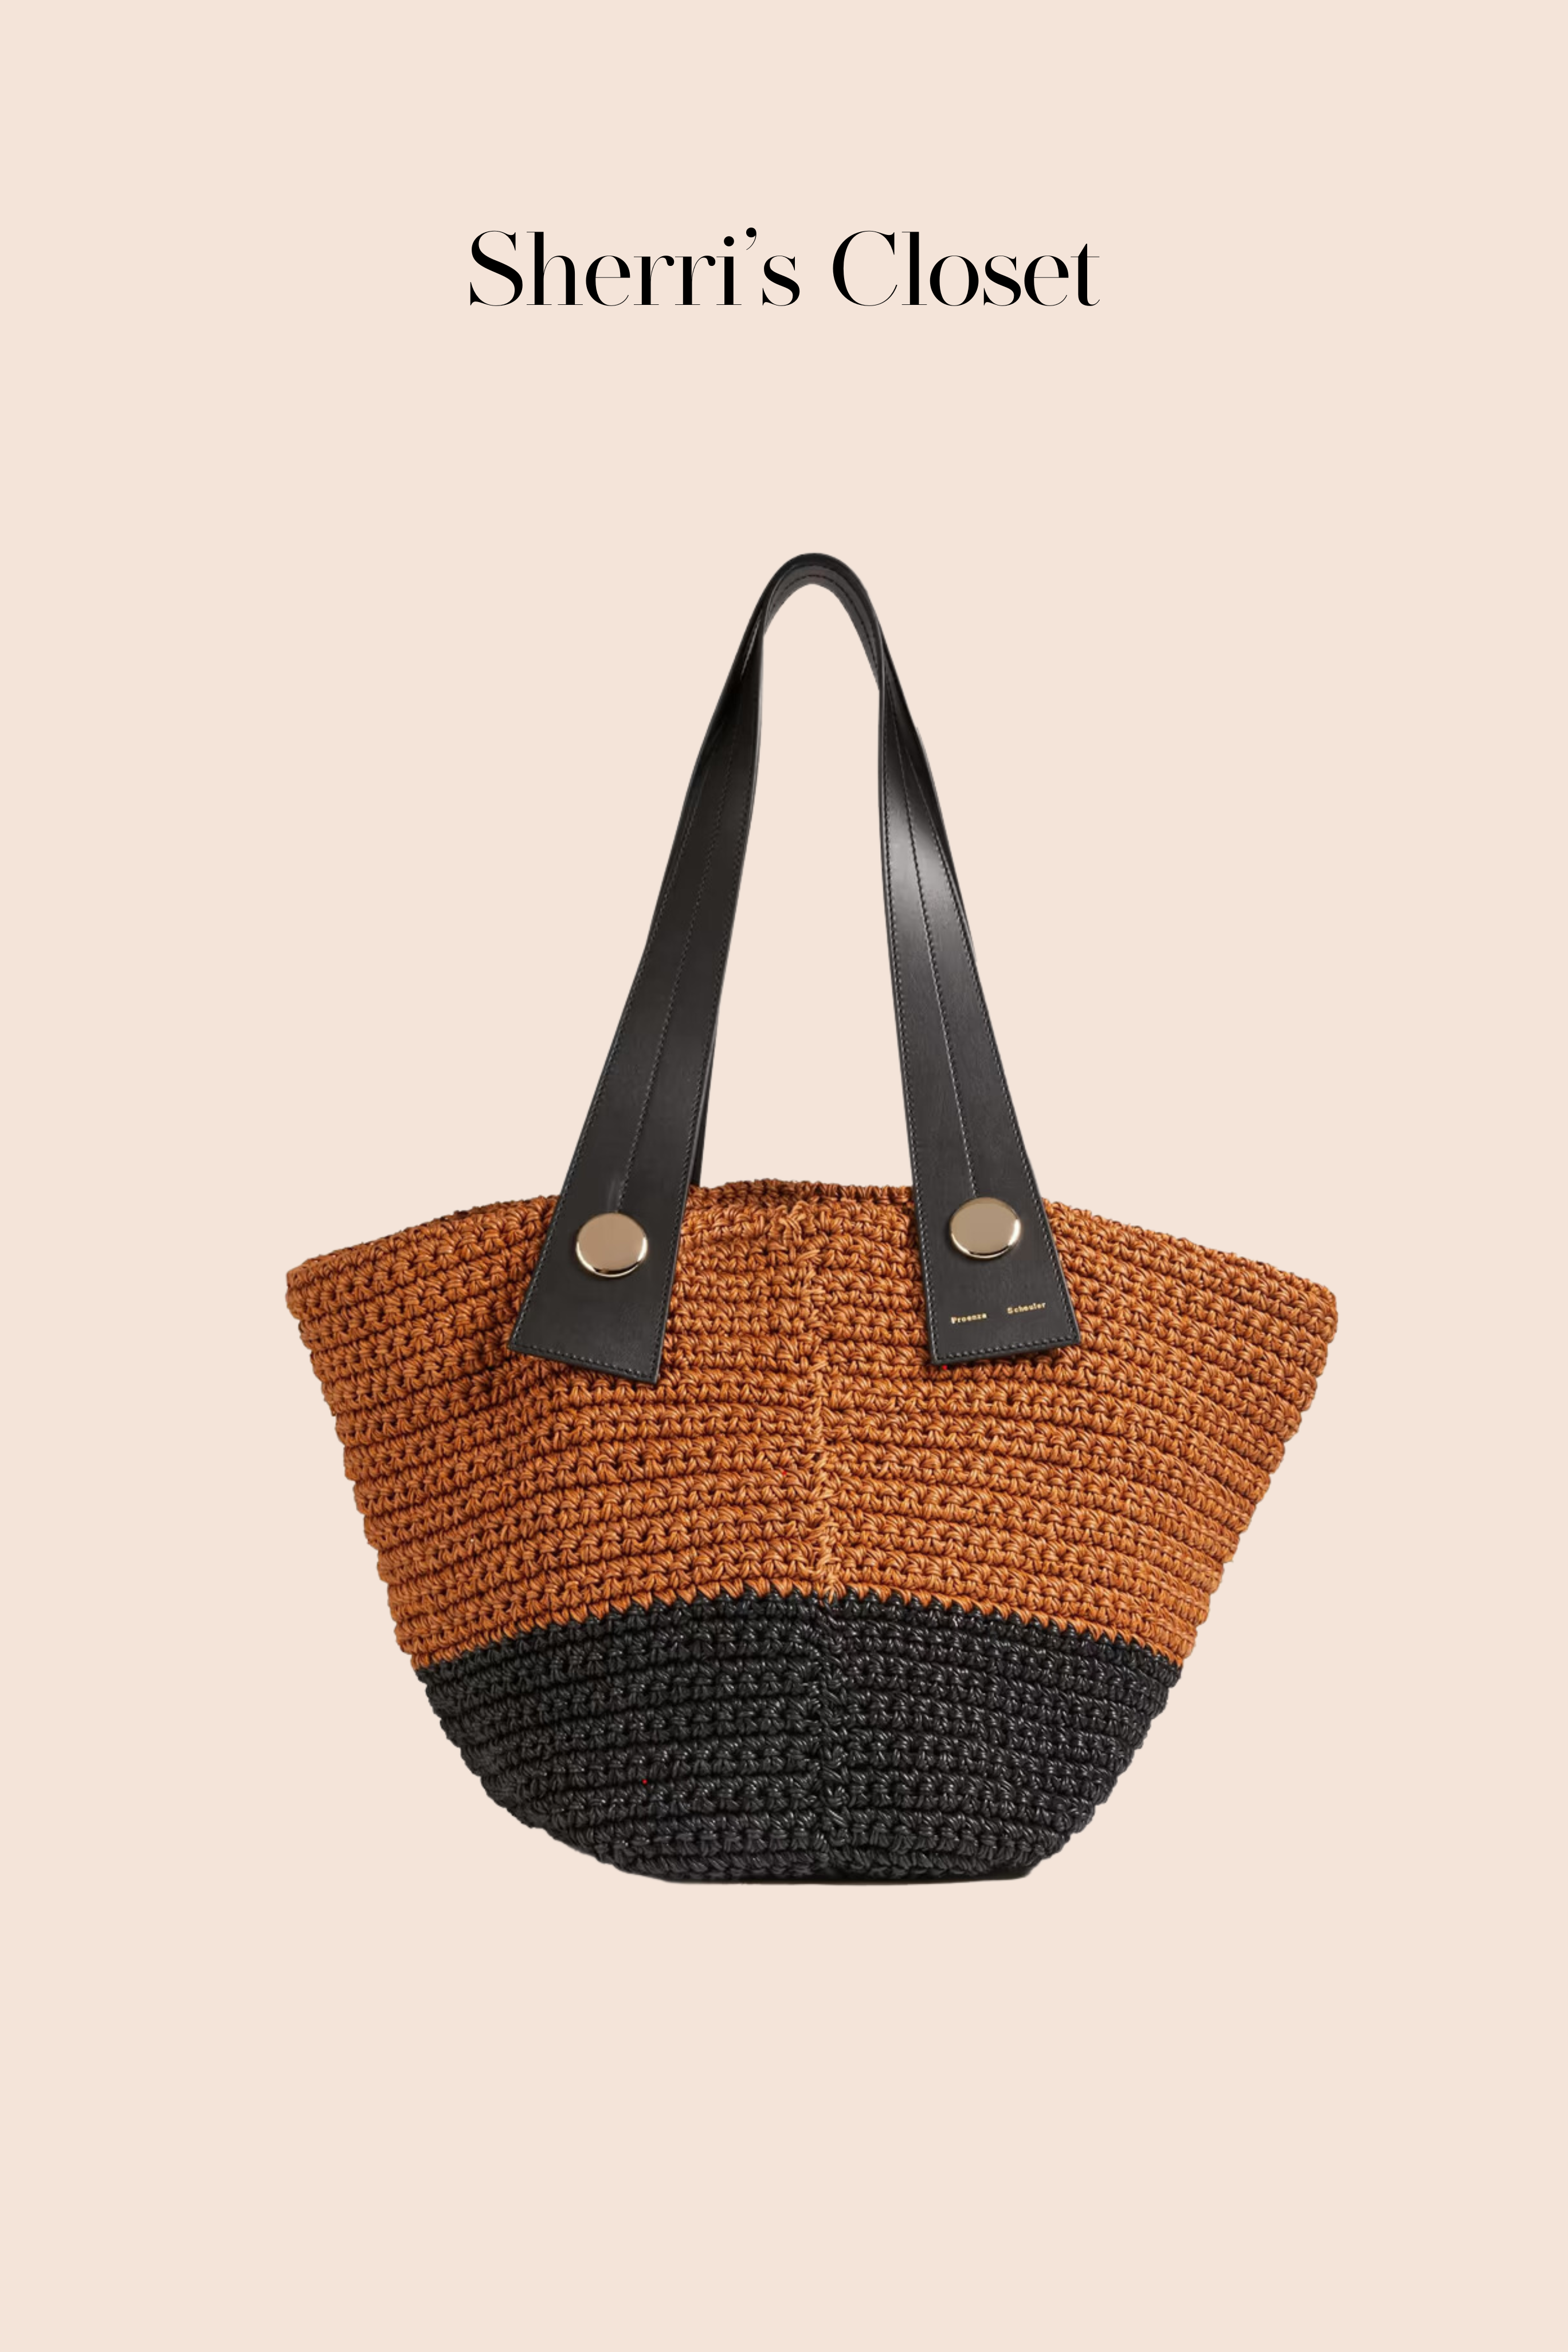 Sherri's Closet: Tobo Large Bicolor Crochet Tote Bag